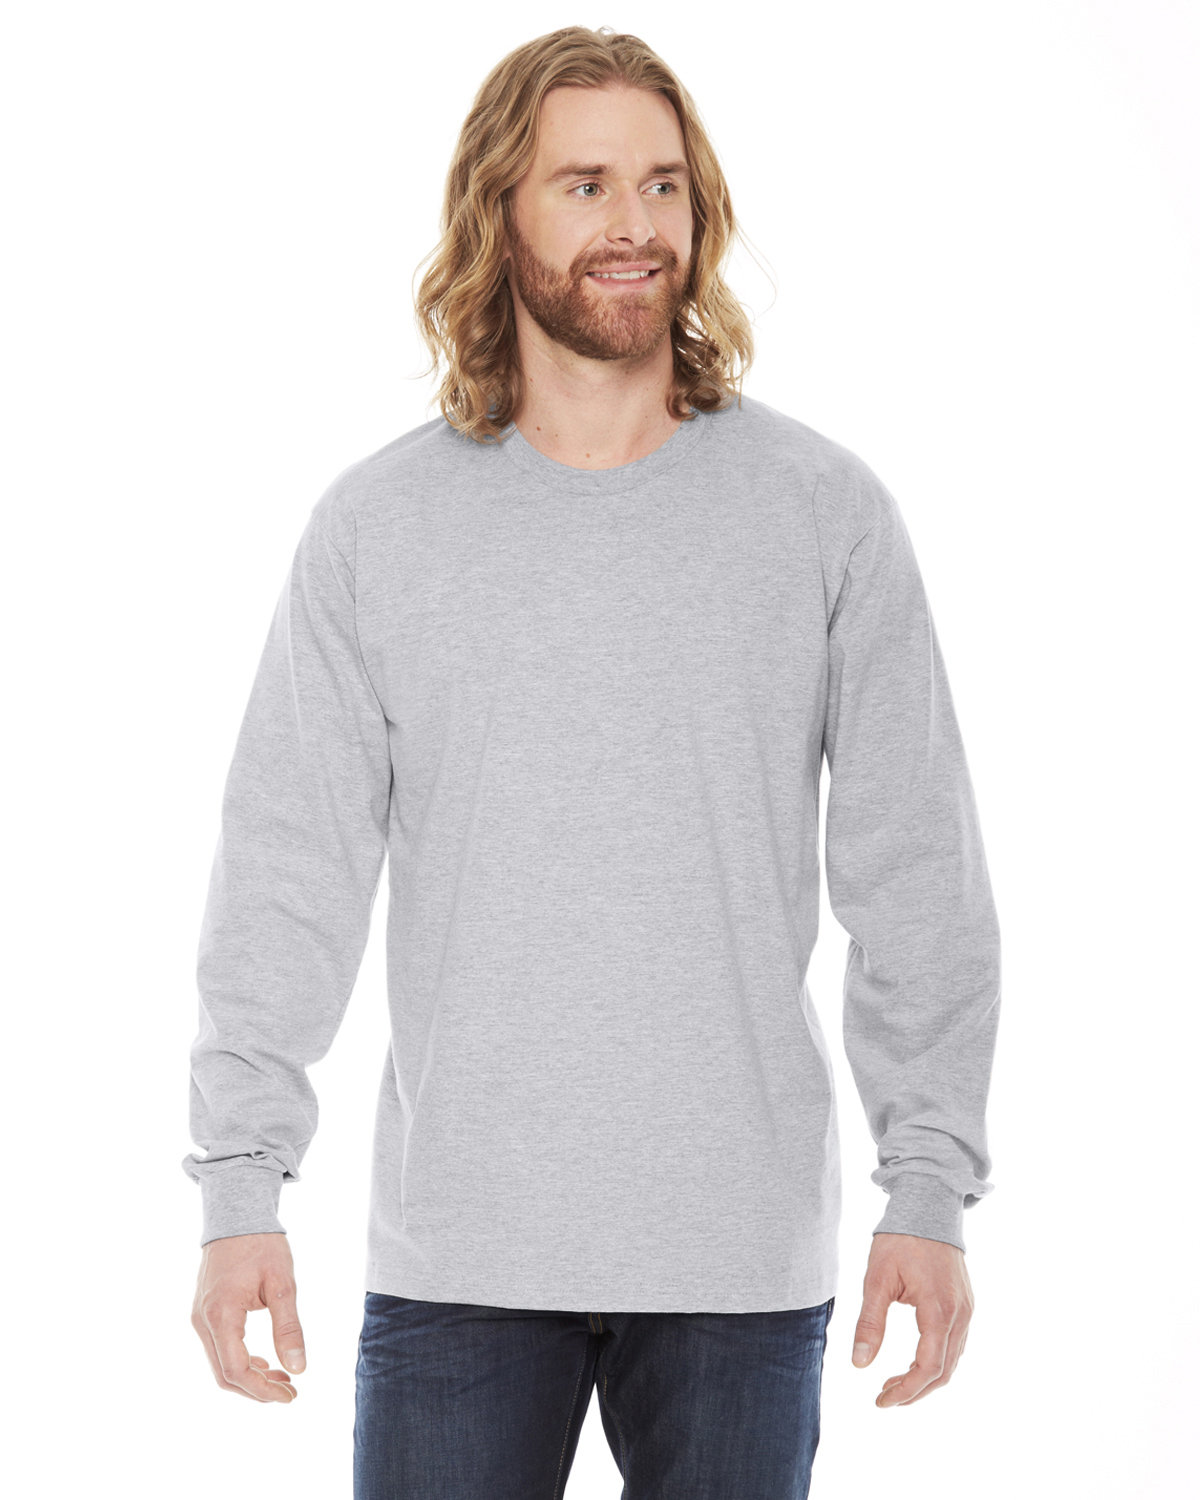 American Apparel Unisex Fine Jersey Long-Sleeve T-Shirt HEATHER GREY 